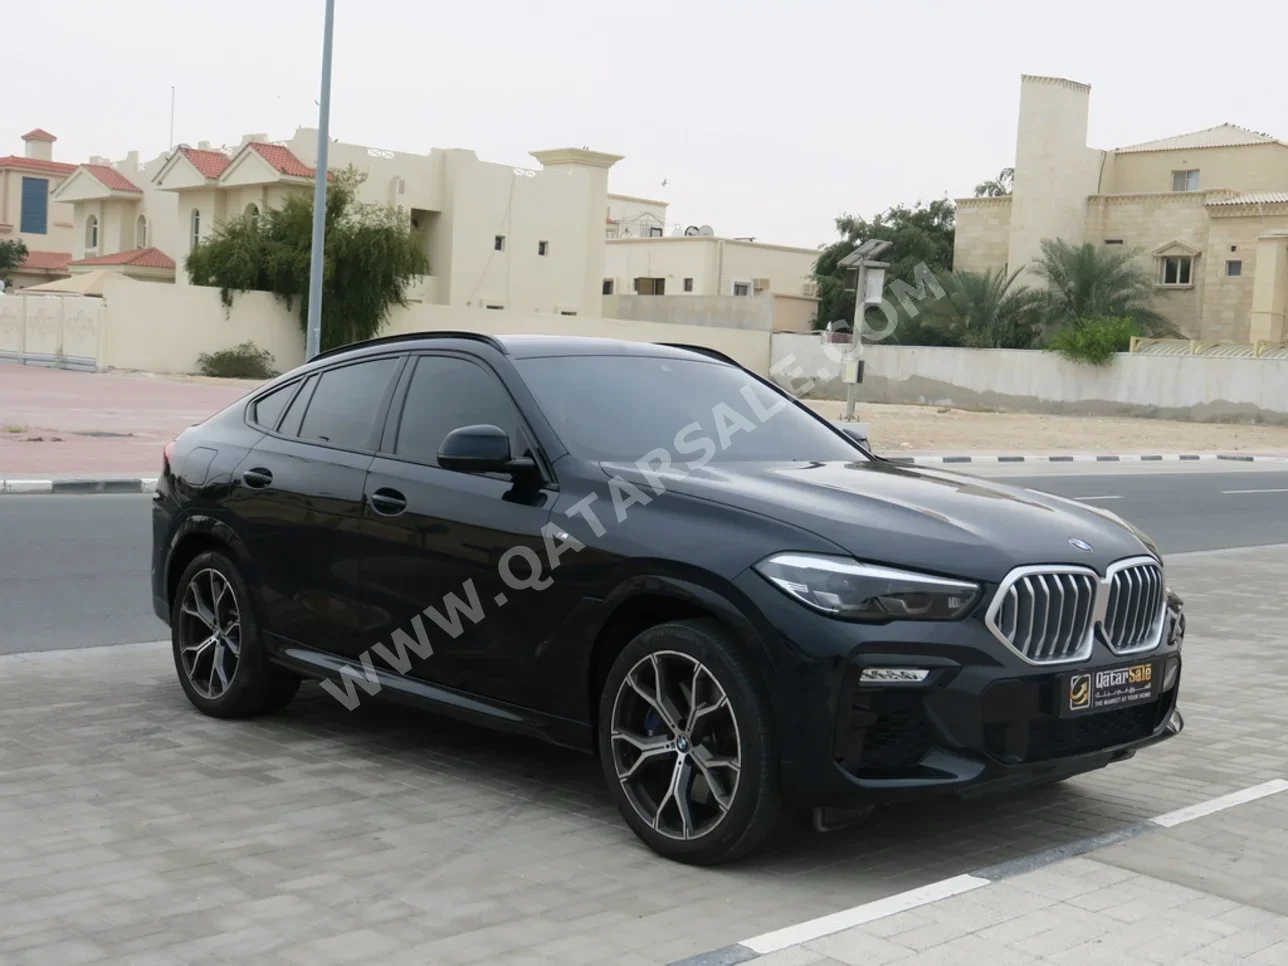 BMW  X-Series  X6 40i  2021  Automatic  17,000 Km  6 Cylinder  Rear Wheel Drive (RWD)  Sedan  Black  With Warranty